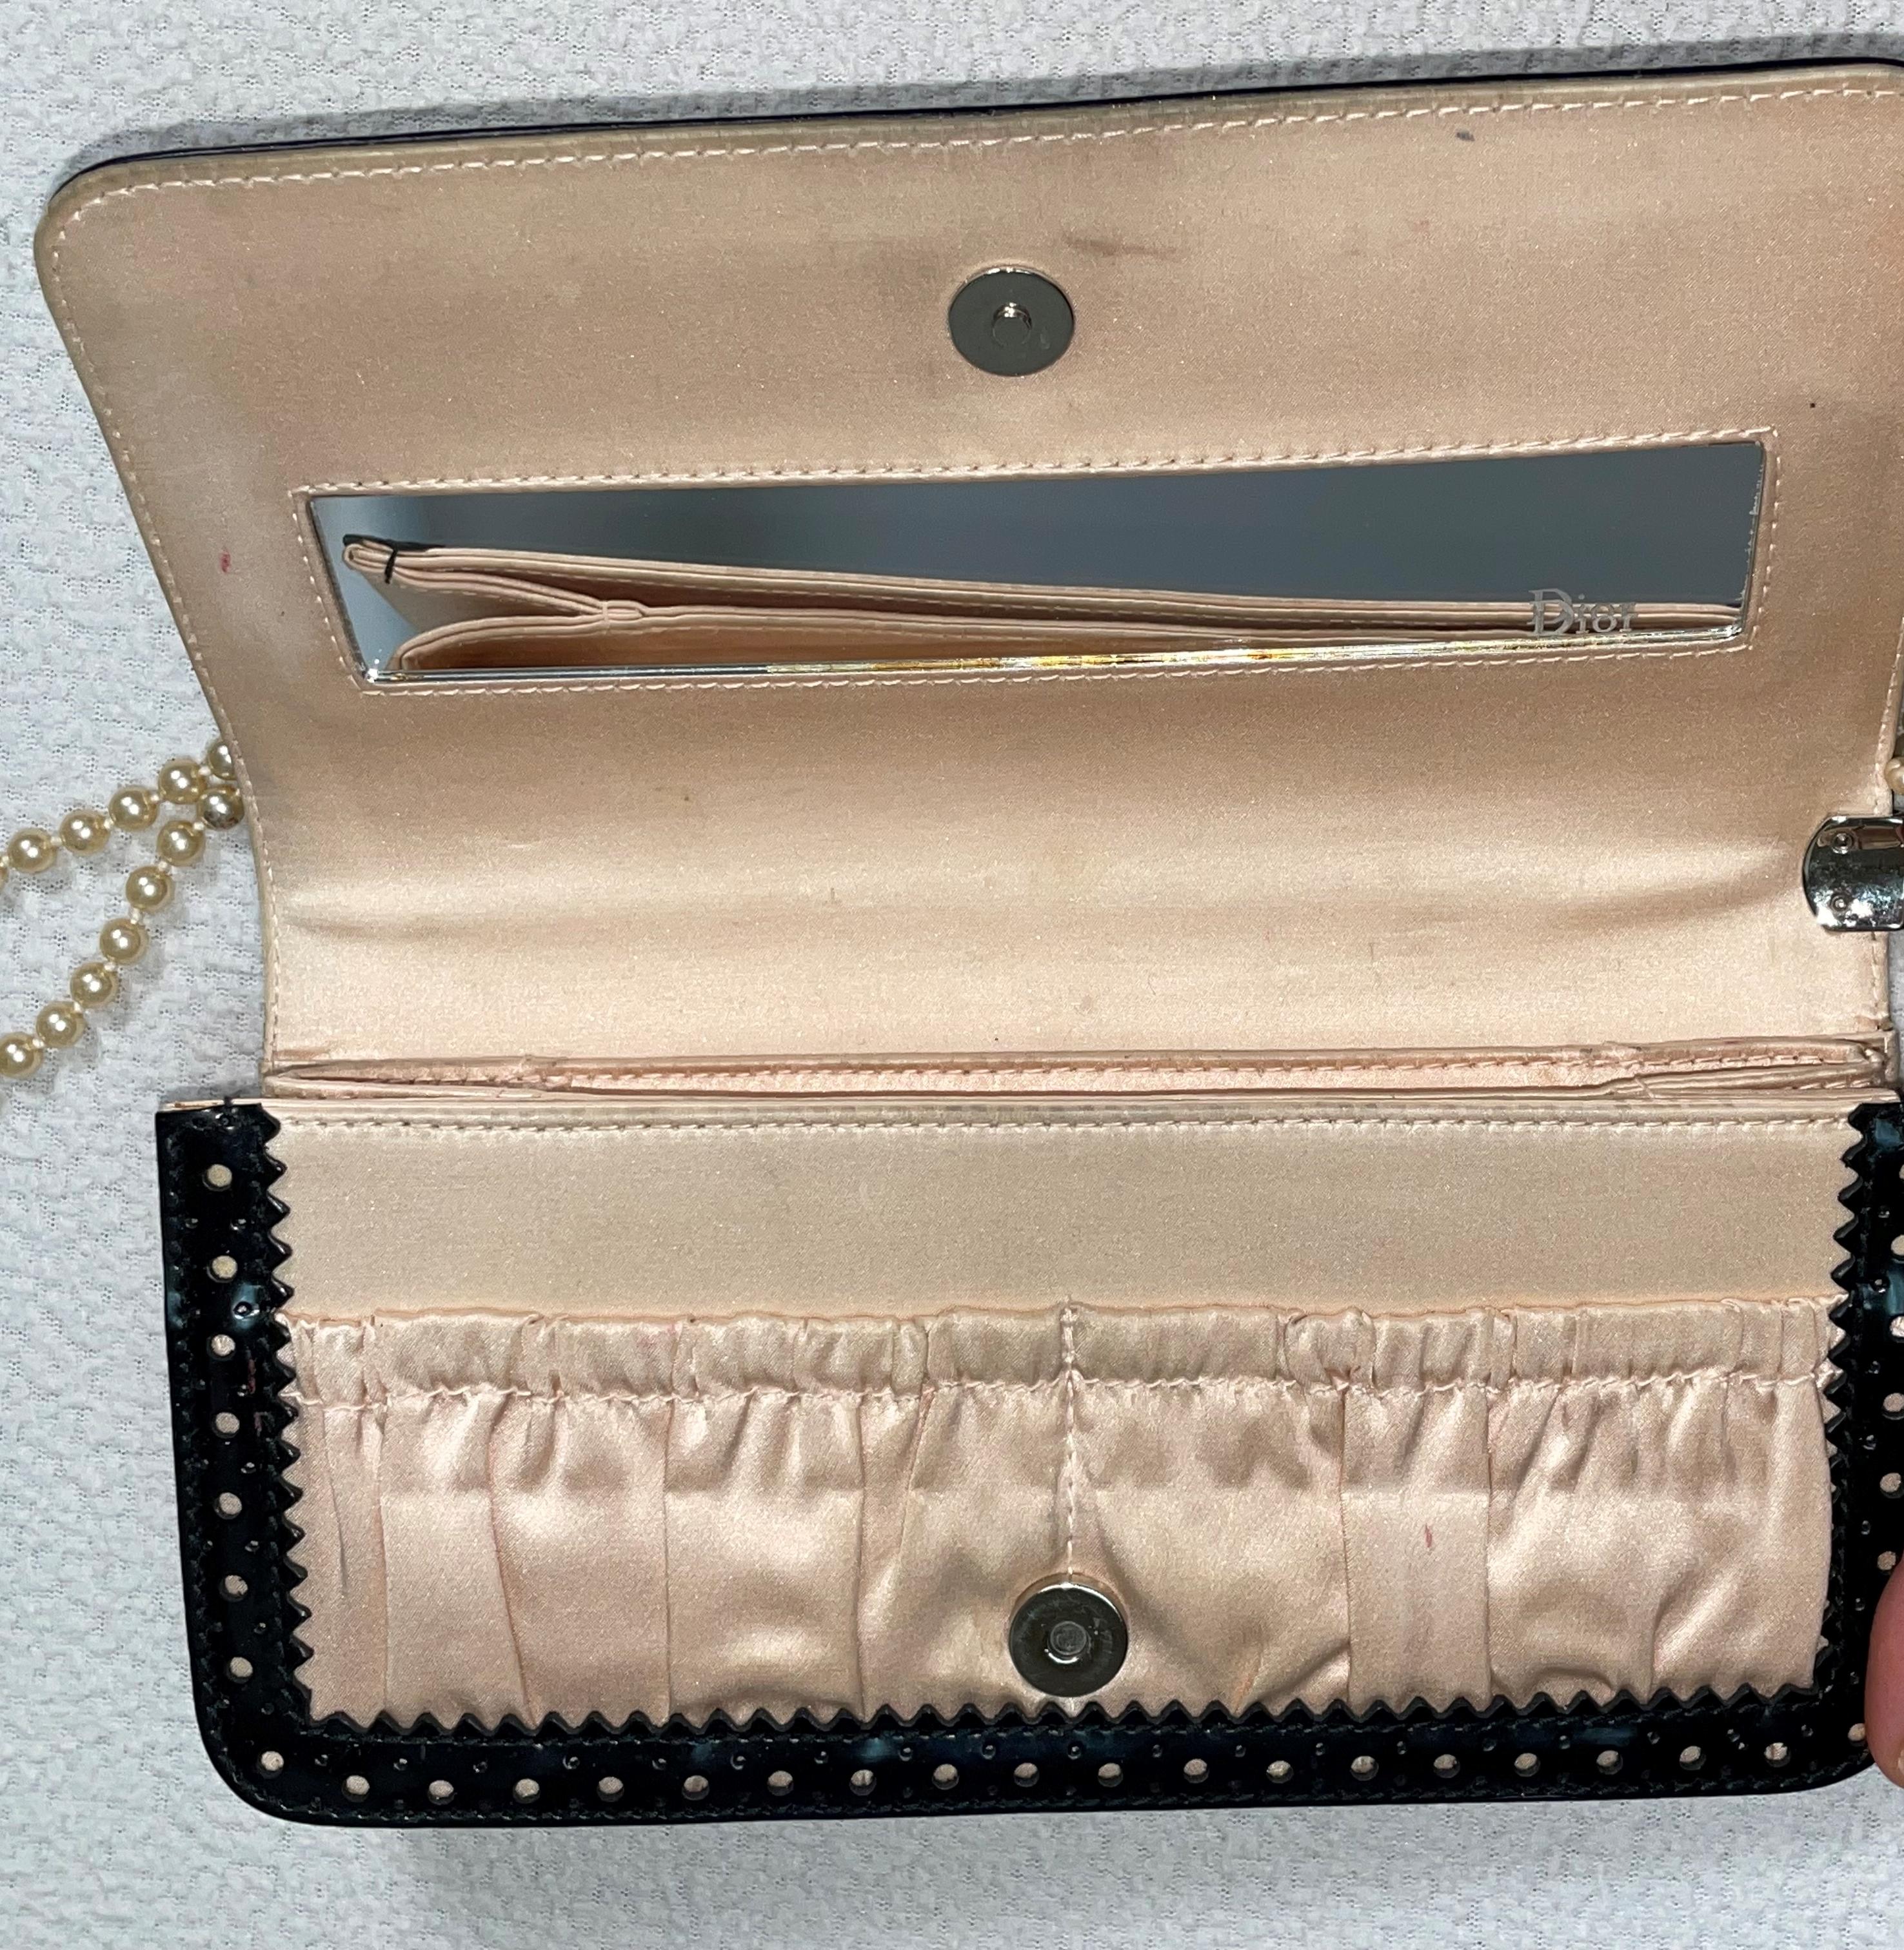 S/S 2004 Christian Dior by John Galliano Runway Rare Spectator Bag Handbag 3